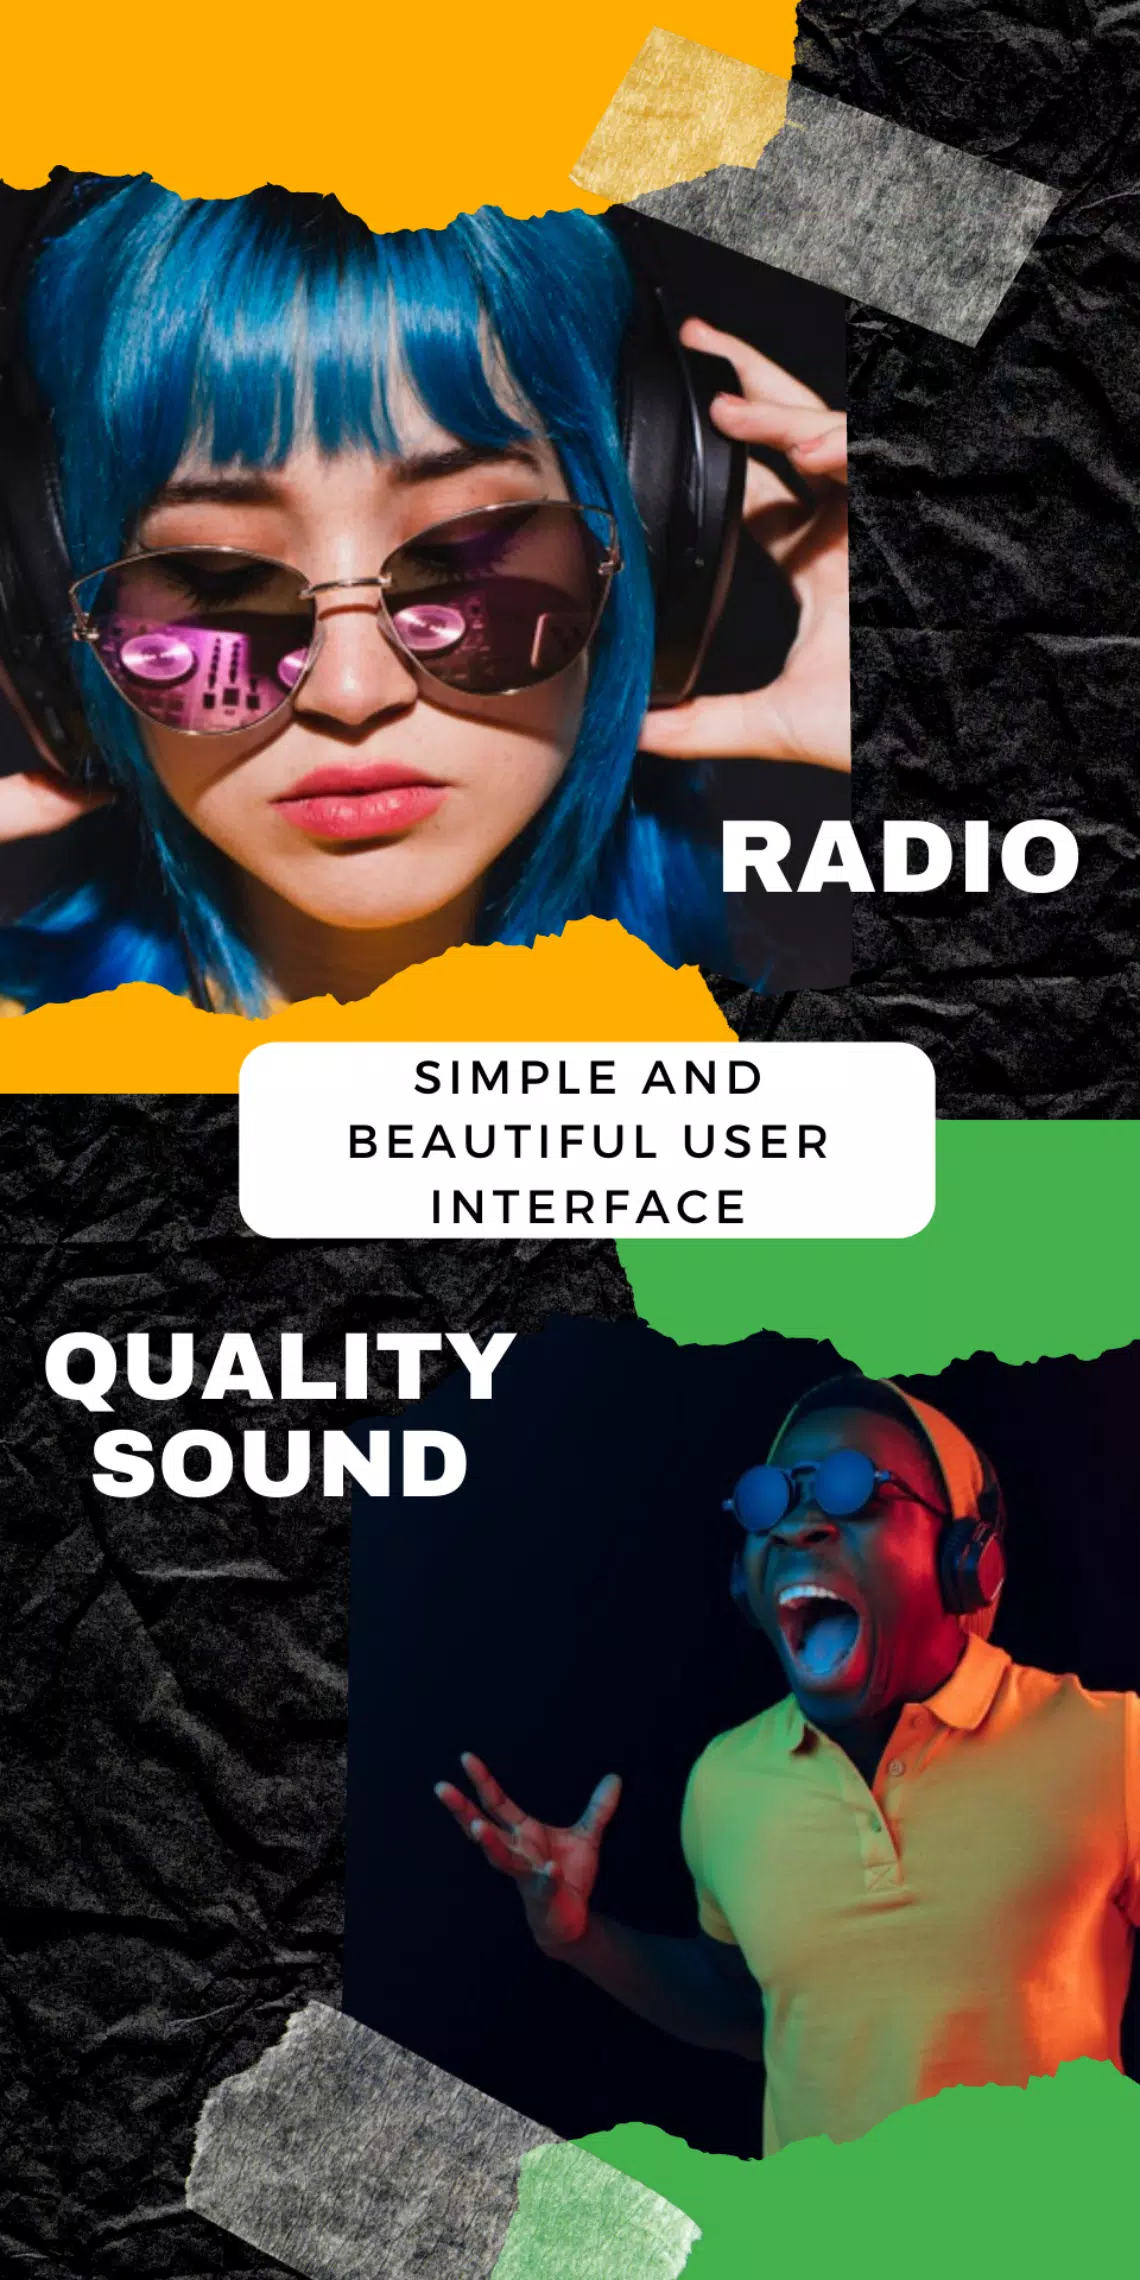 big l radio uk app online for Android - APK Download